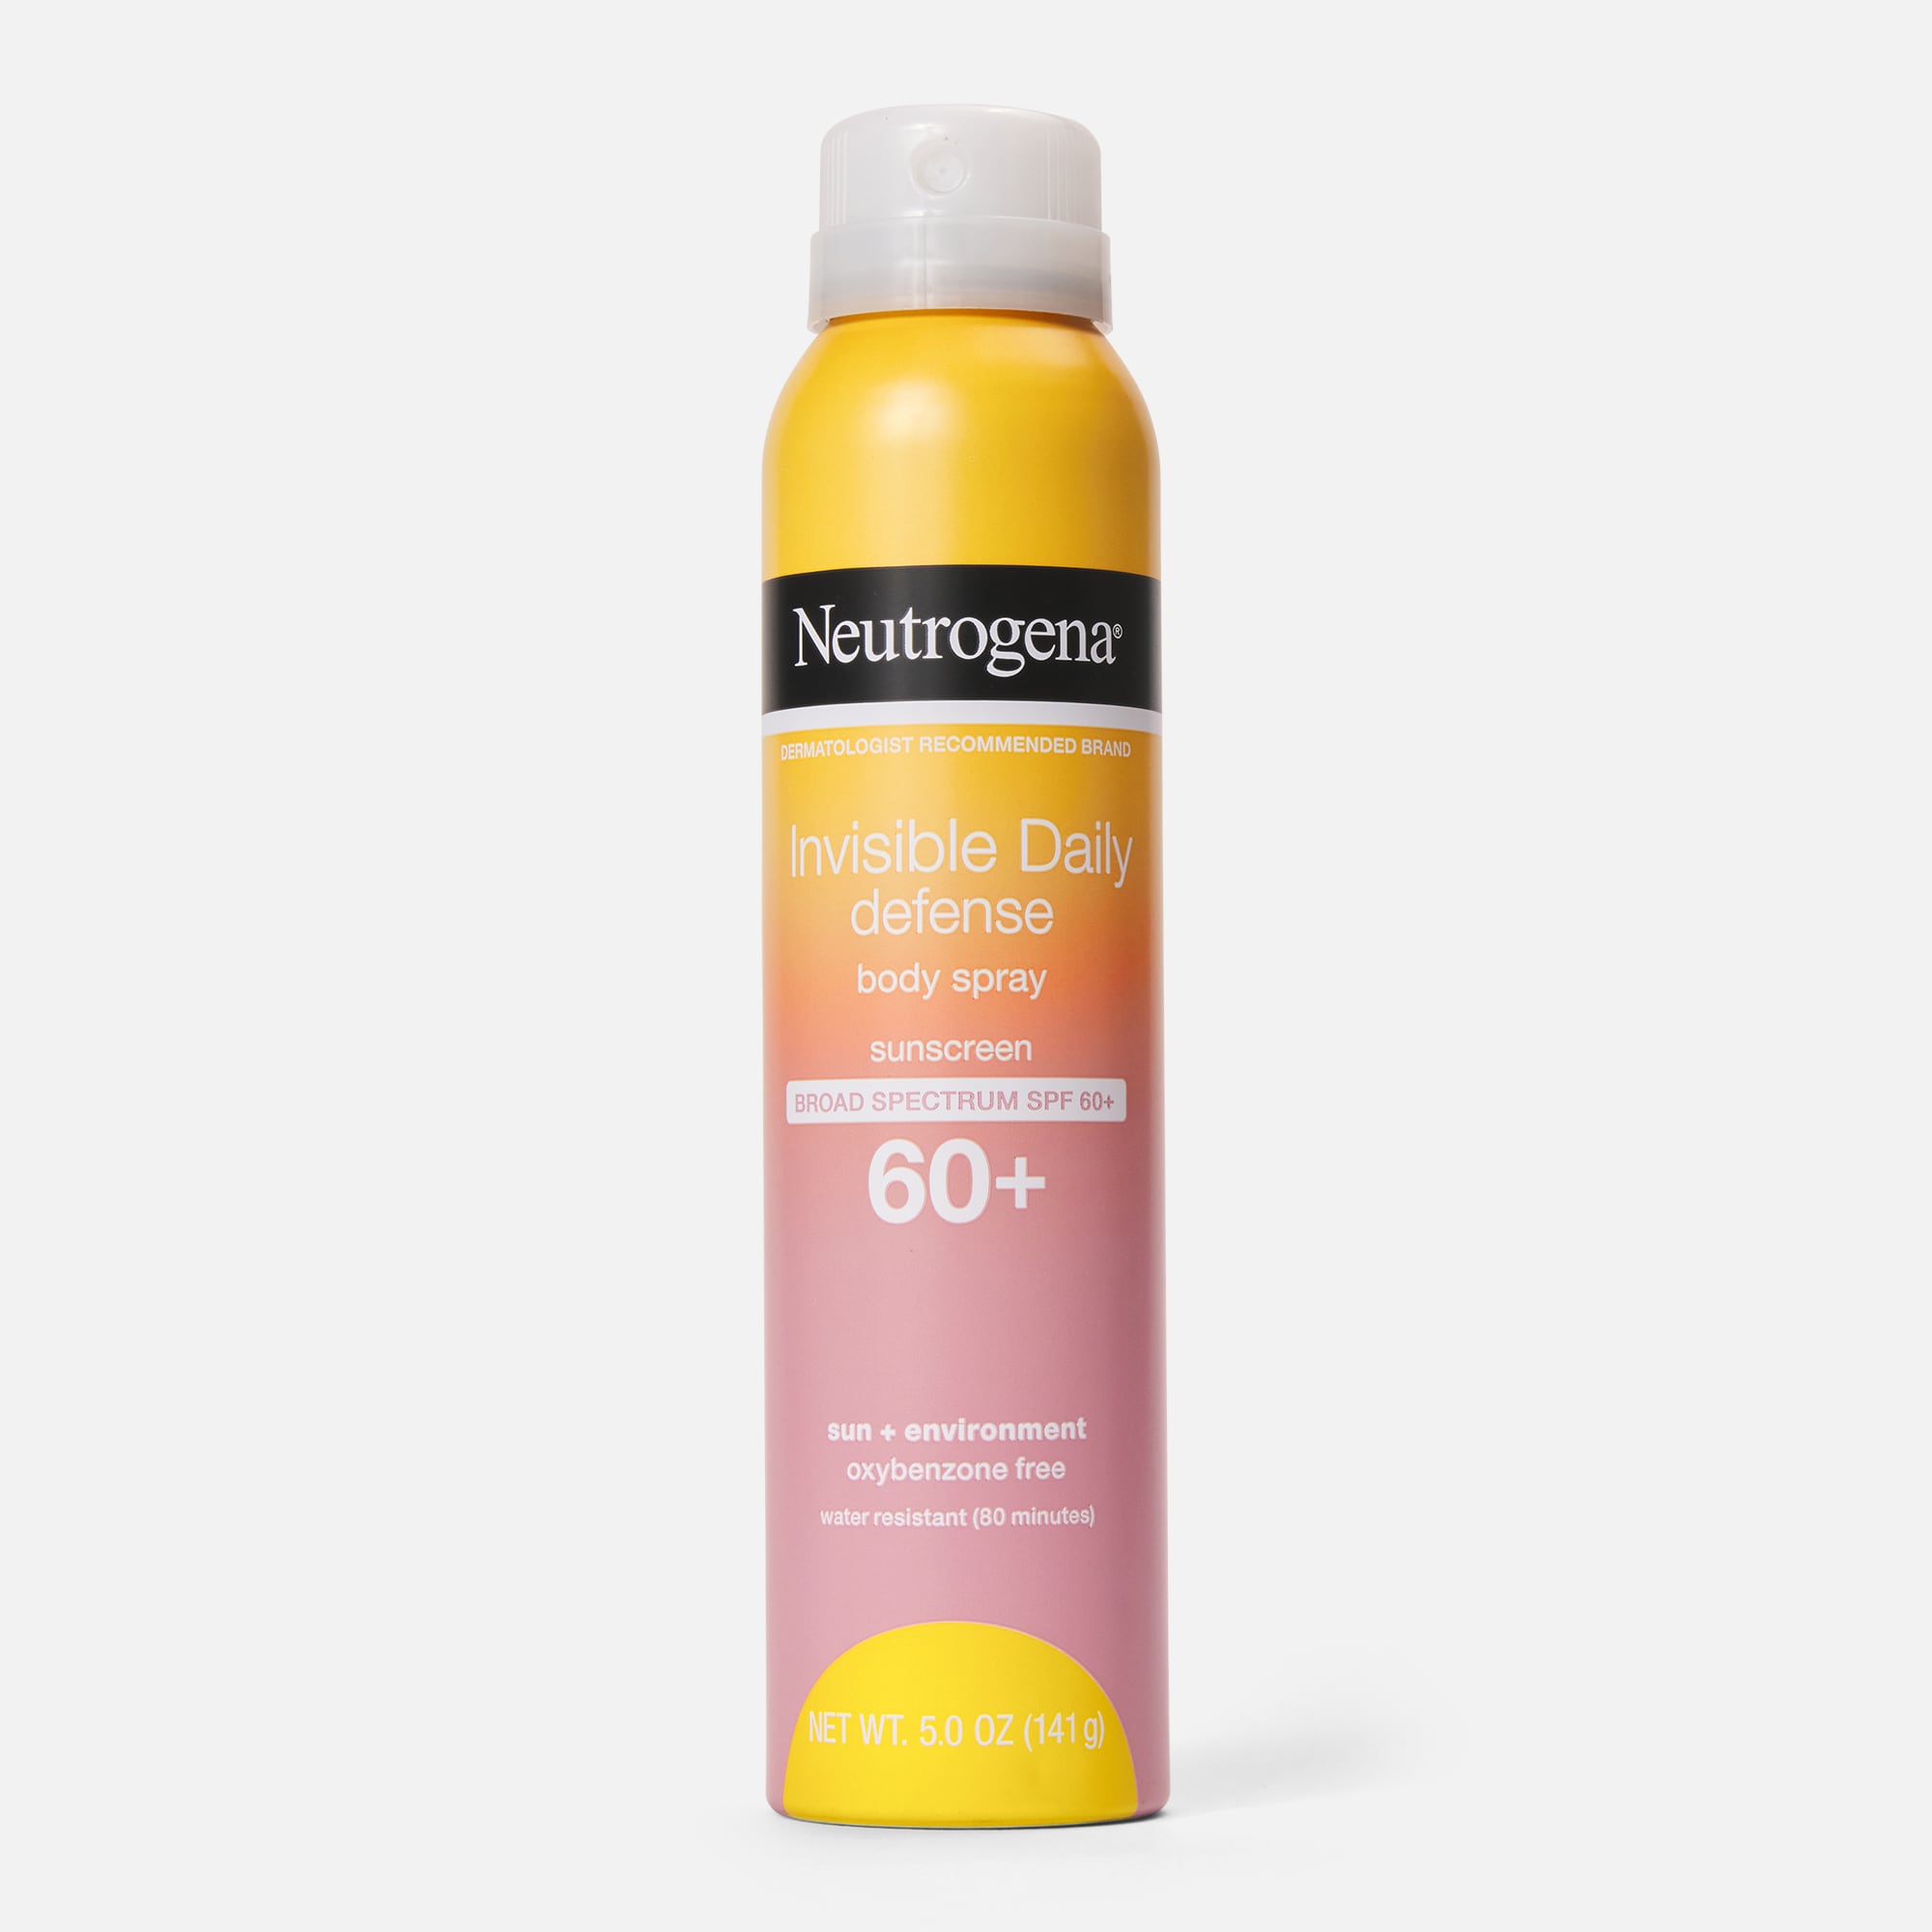 Neutrogena Invisible Daily Defense Sunscreen Spray - SPF 60+, 5 oz